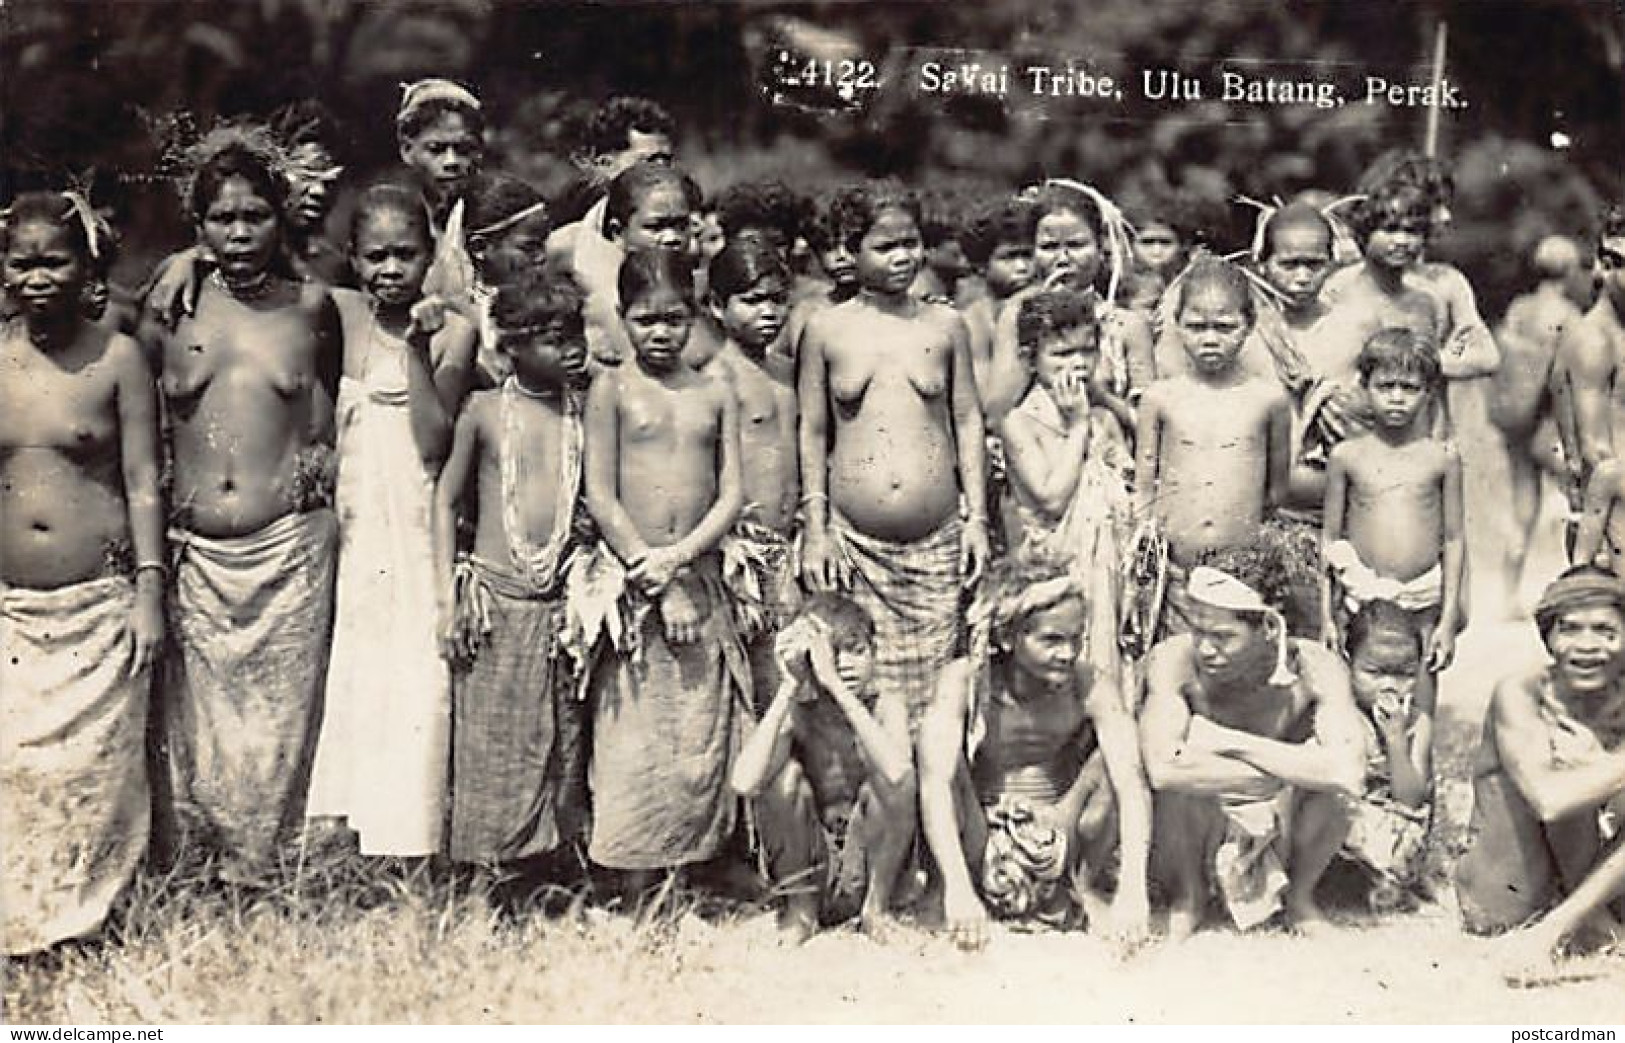 Malaysia - ULU BATANG Perak - ETHNIC NUDE - Sakai Tribe - REAL PHOTO - Publ. Unknown  - Maleisië